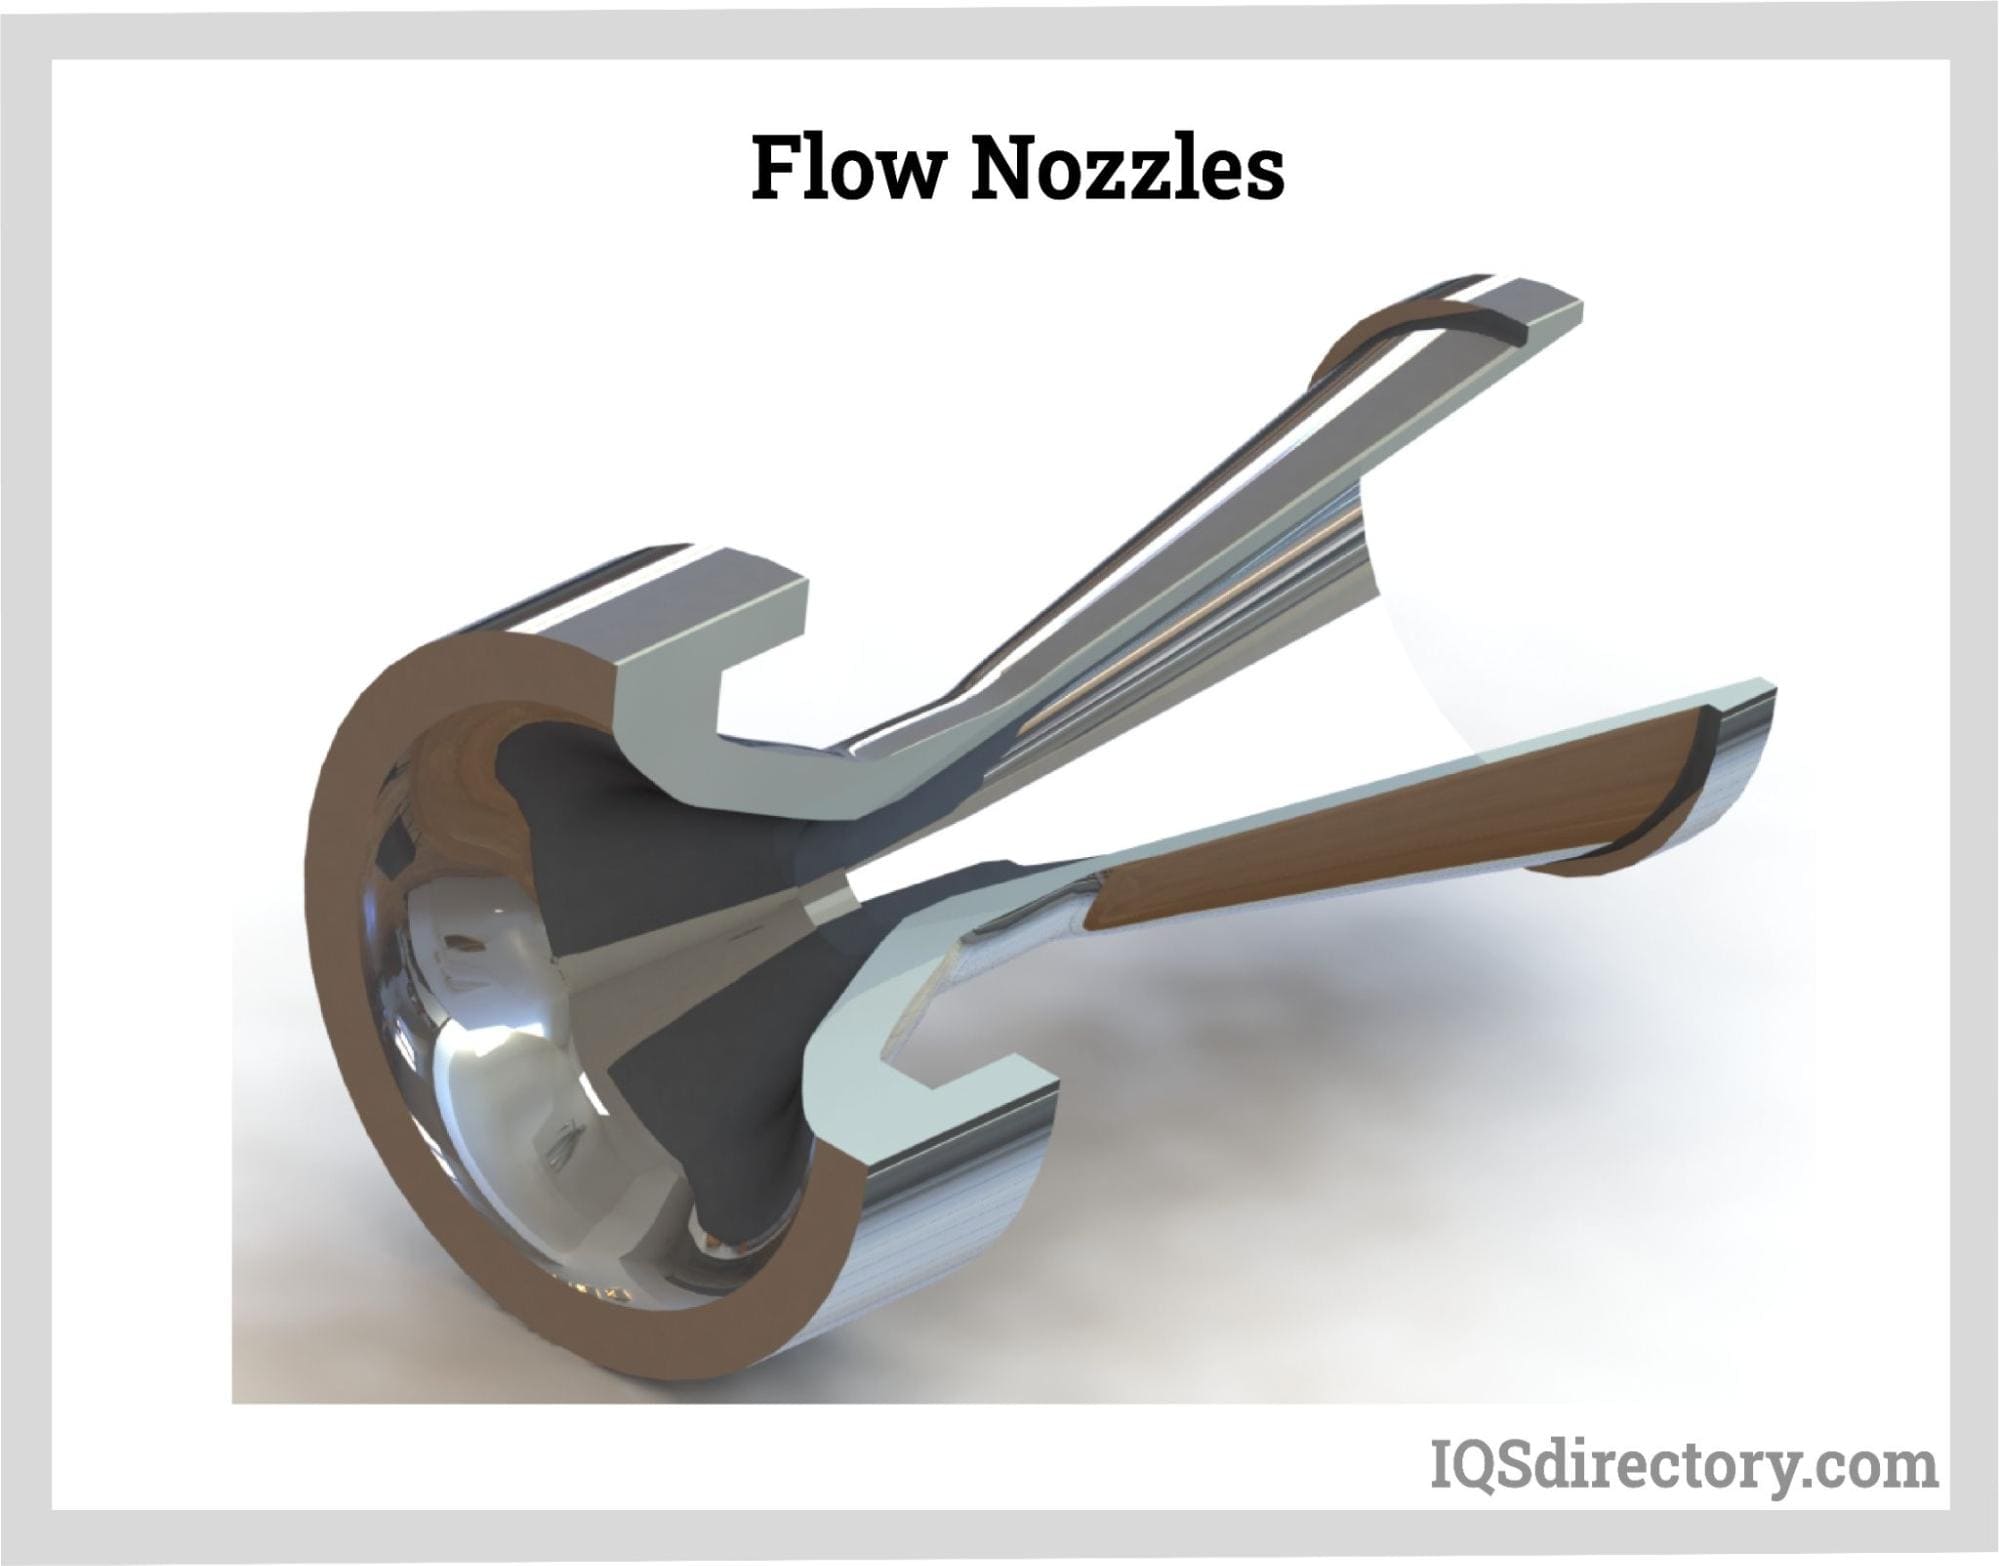 Flow Nozzles